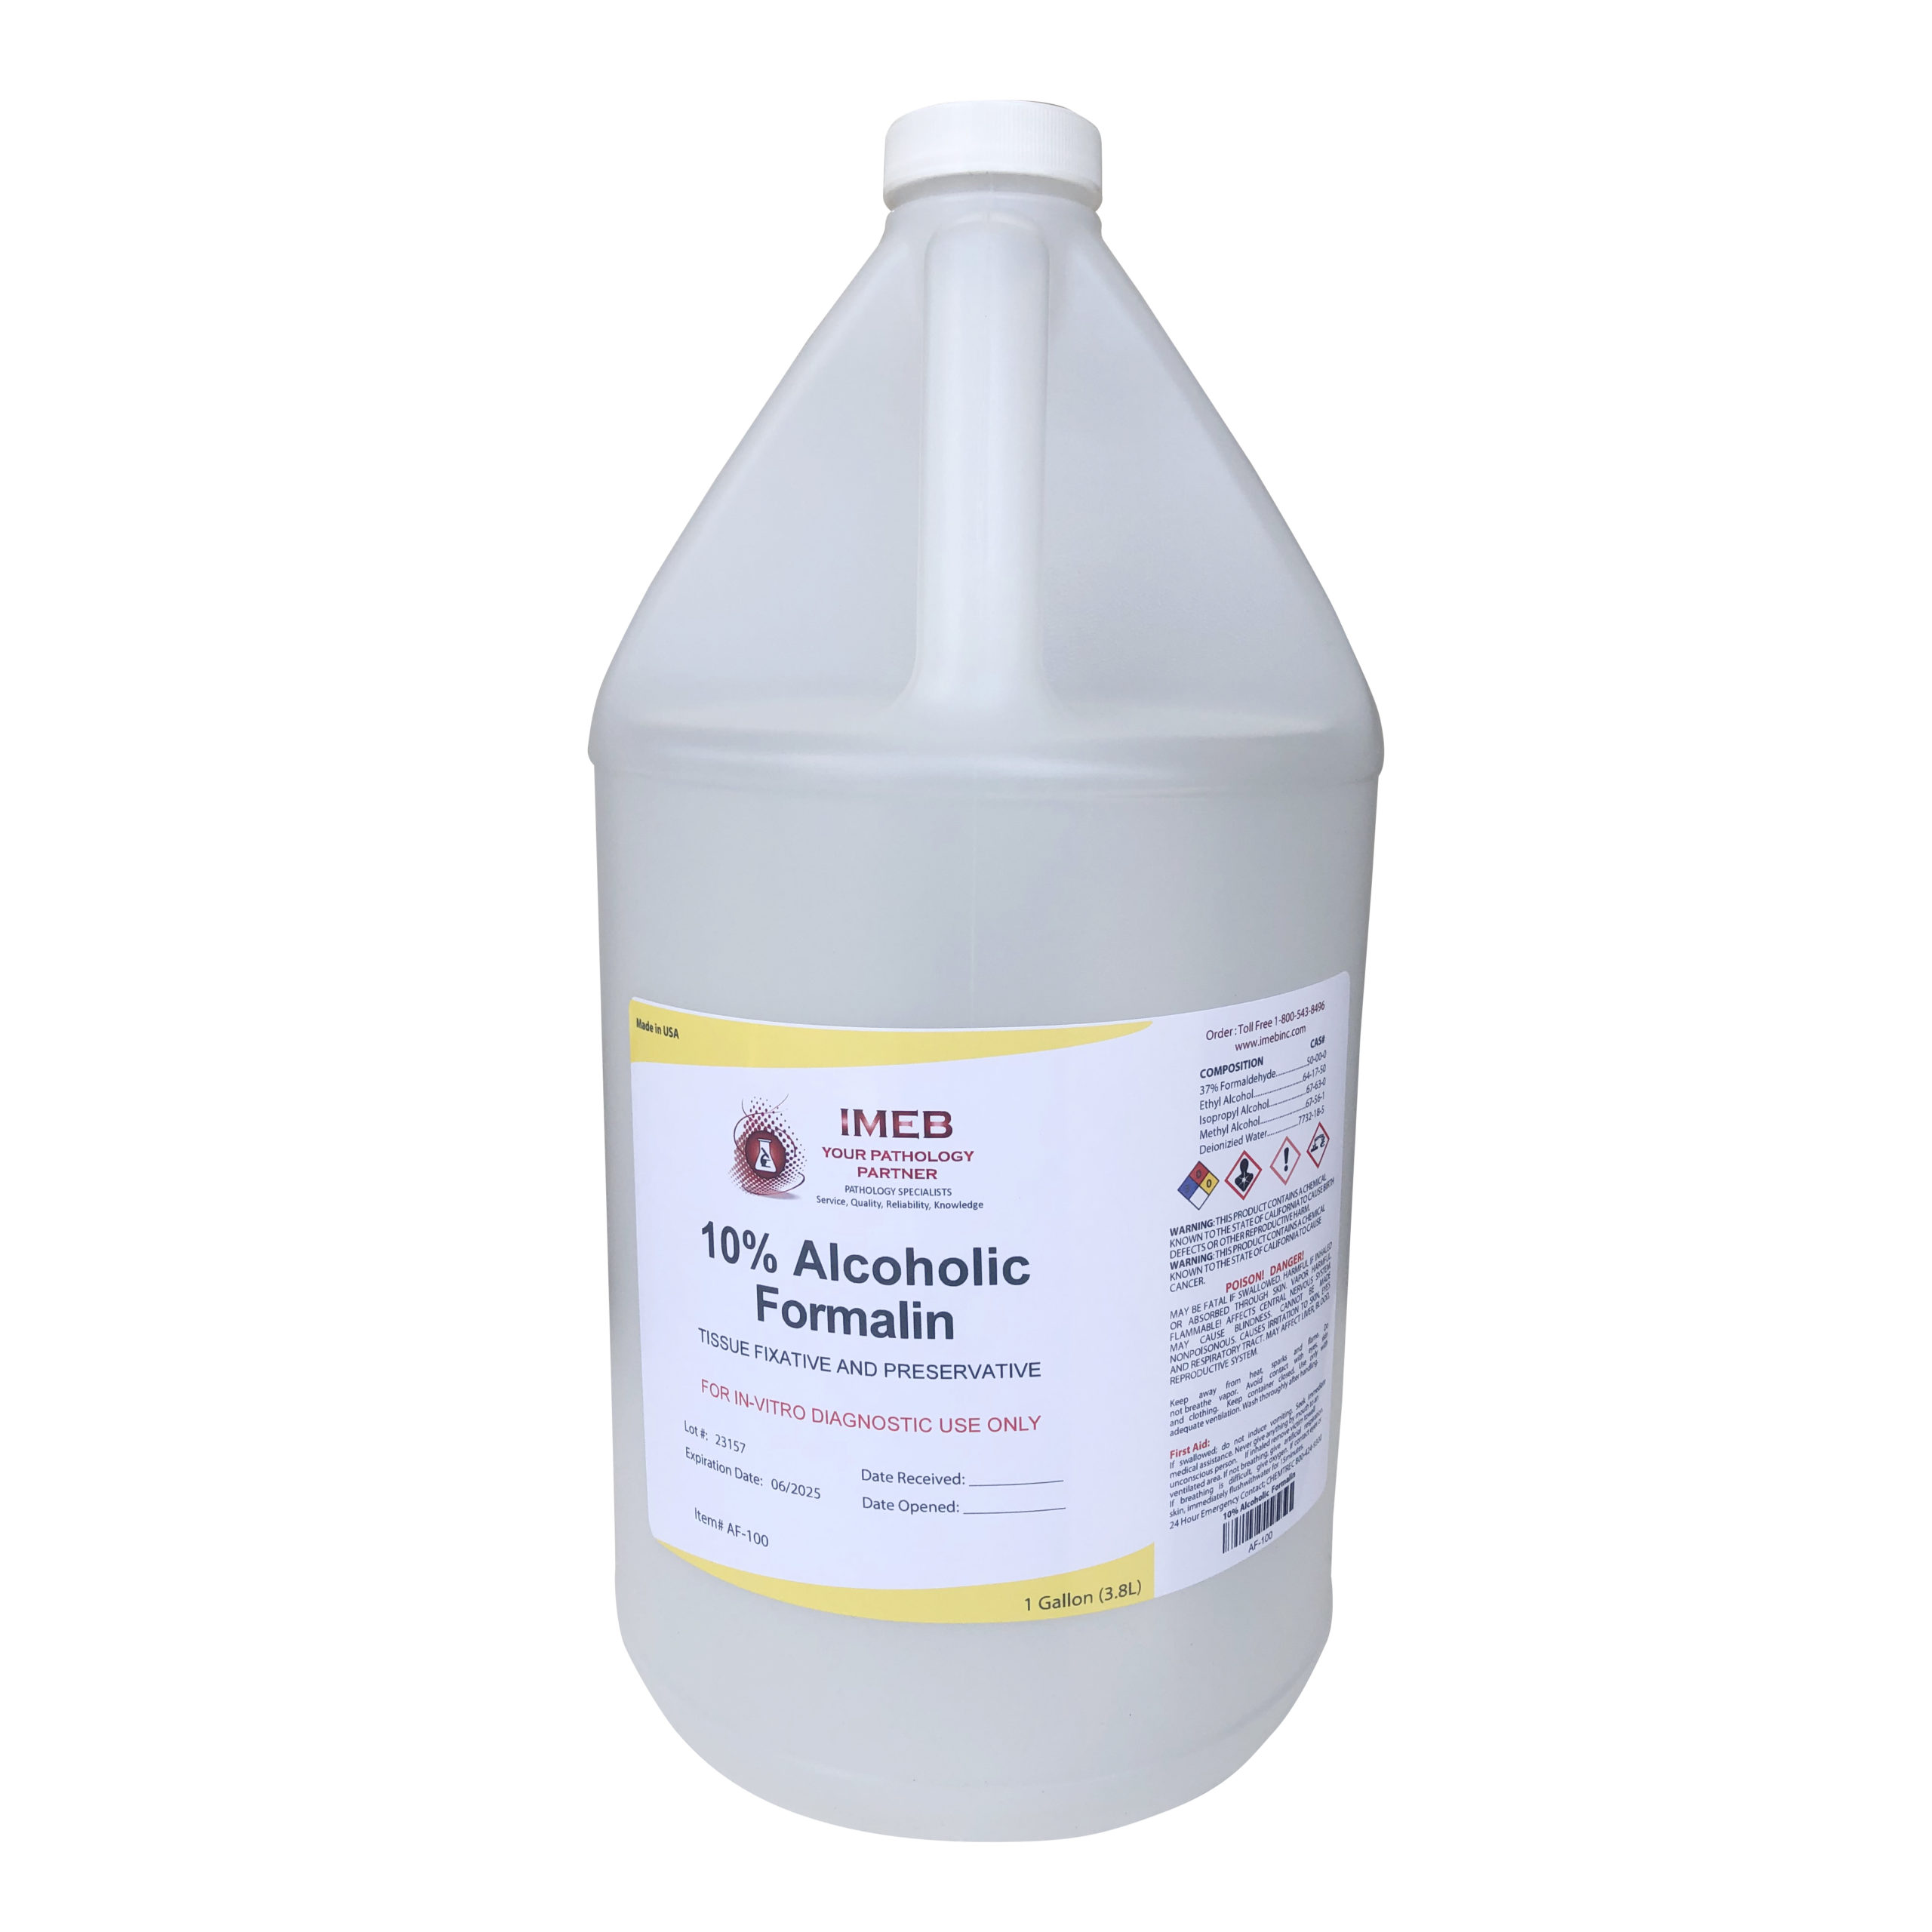 Tek-Select Alchoholic Formailn, 10% 1 gallon